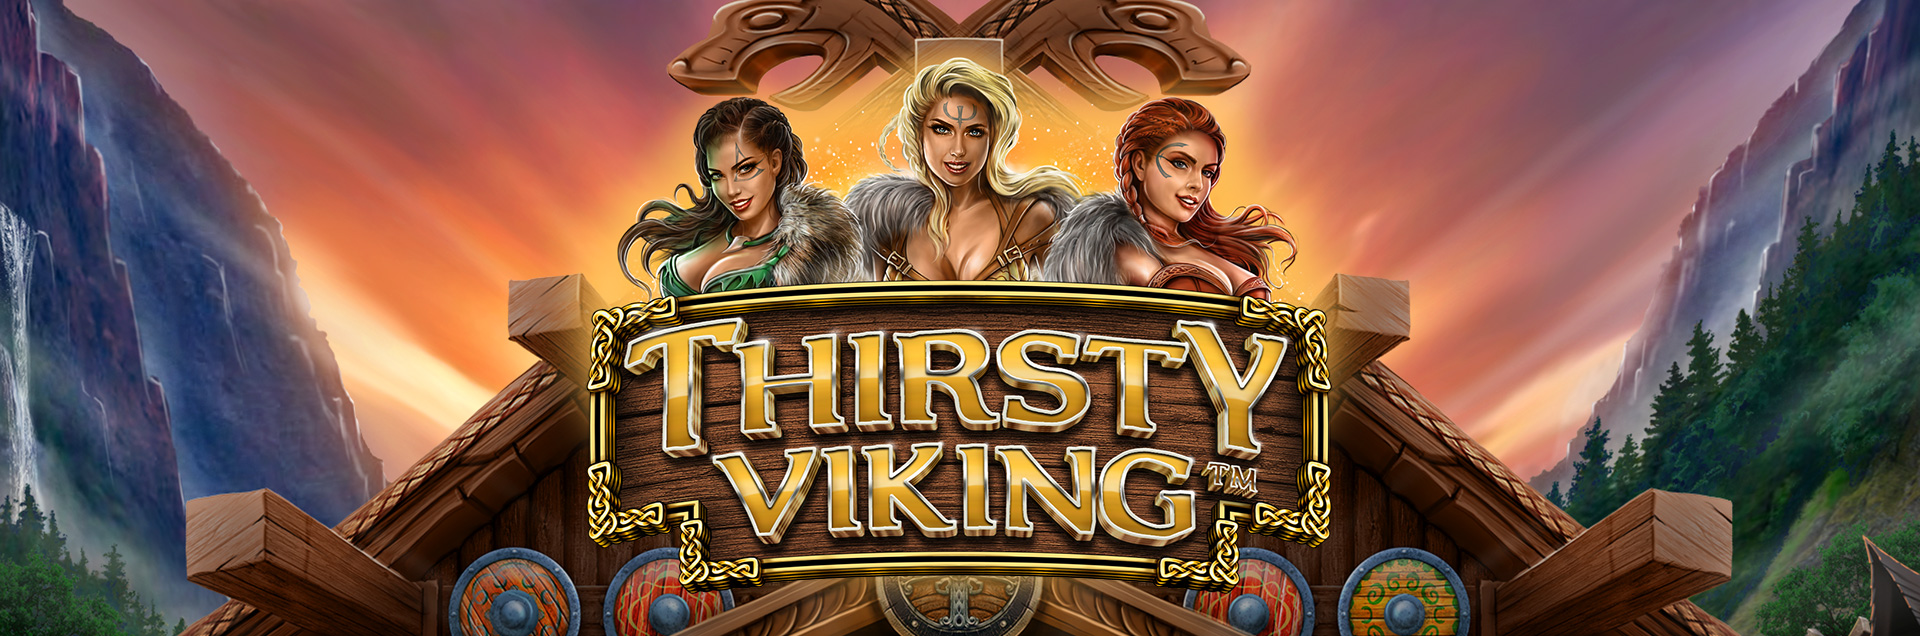 Thirsty Viking header games